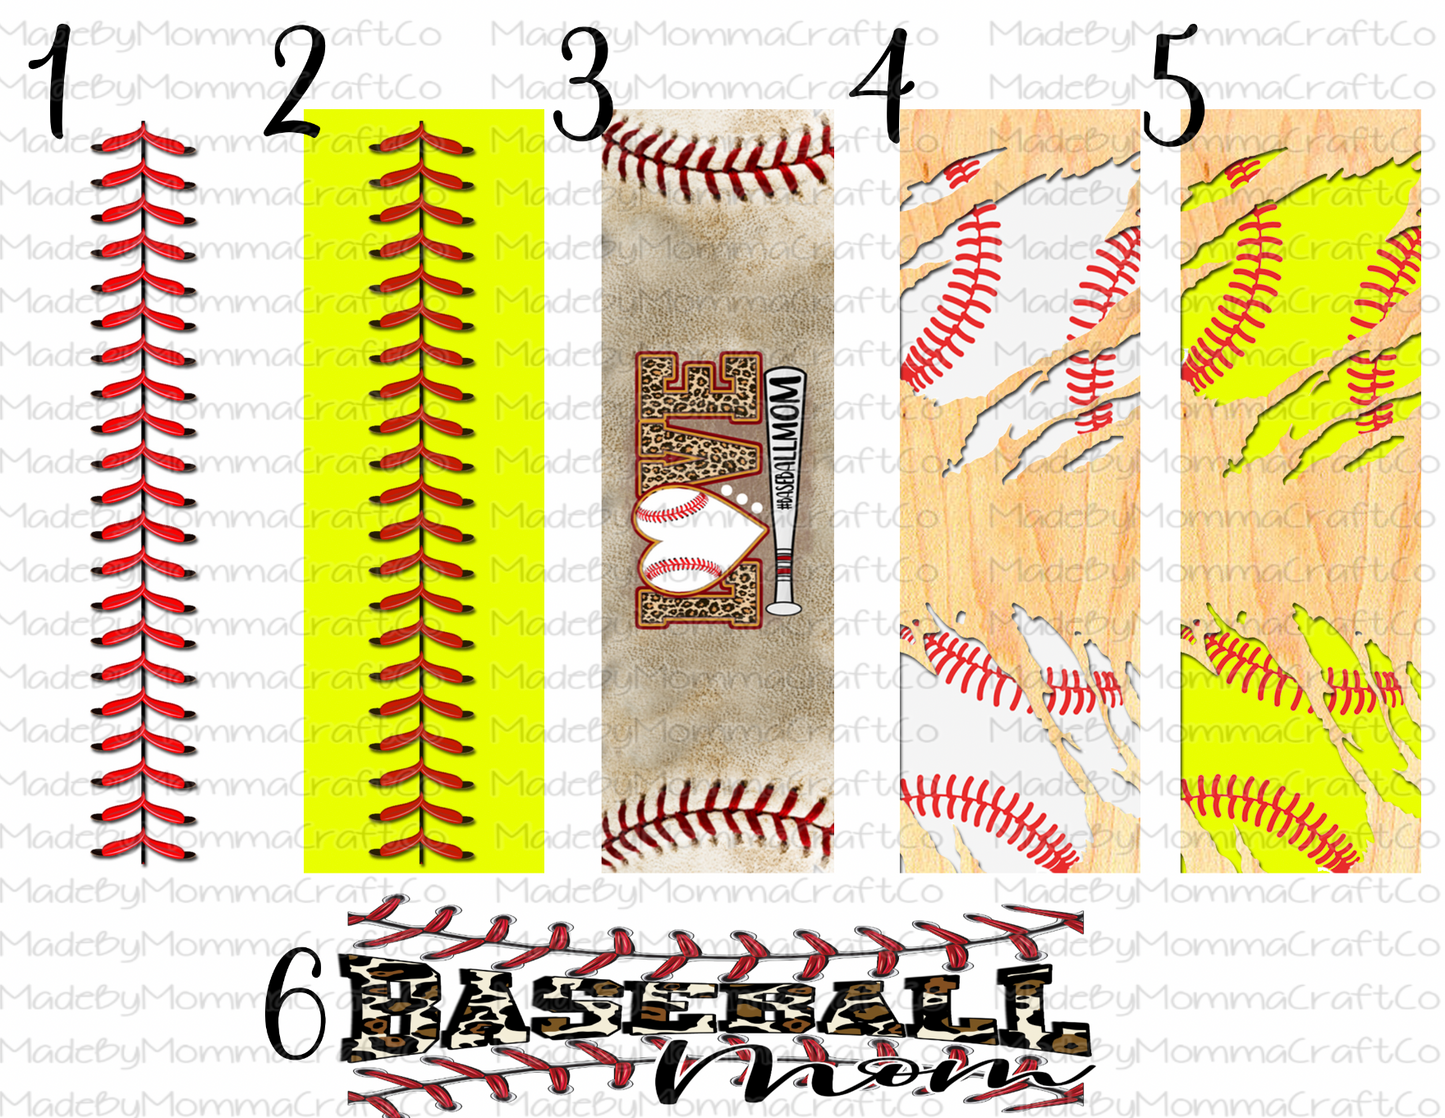 Softball and Baseball Pen wraps - Printed Waterslides